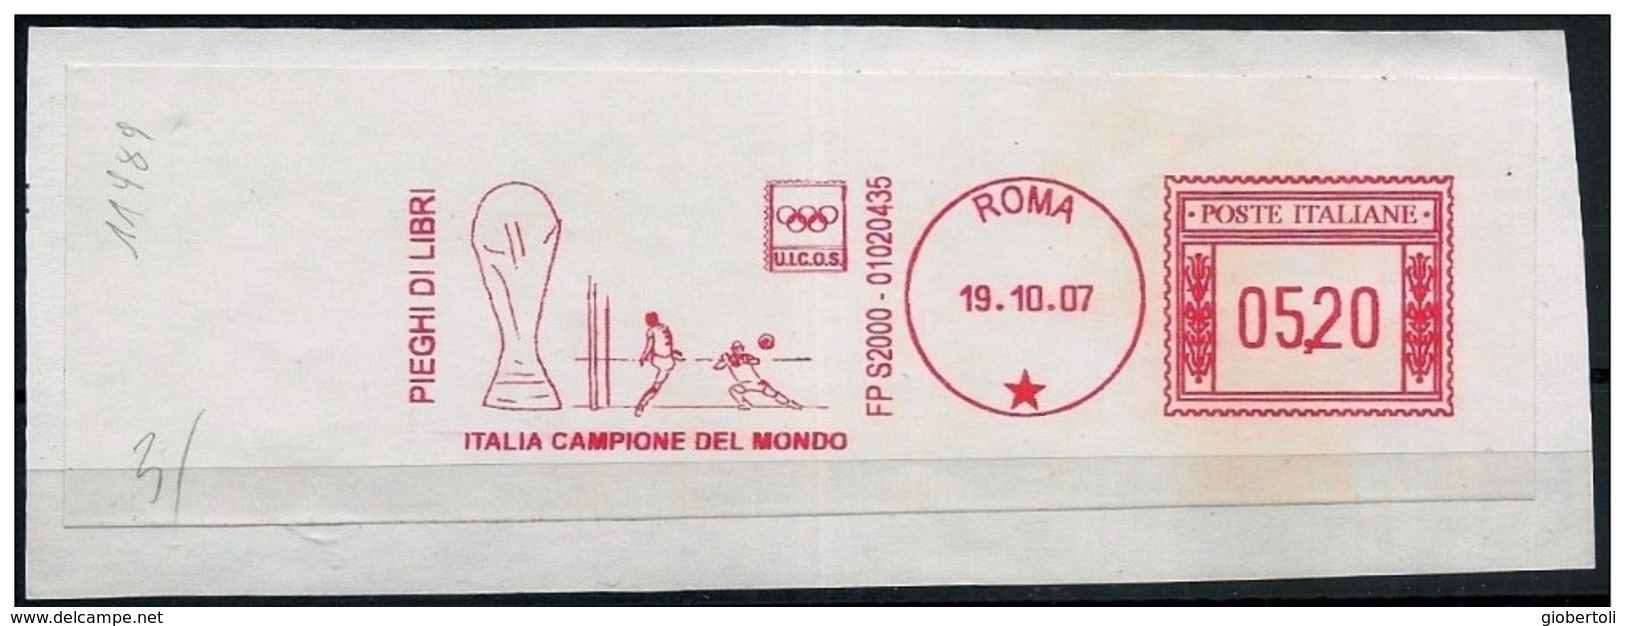 Italia/Italie/Italy: Ema, Meter, "Italia Campione Del Mondo", "Italian World Champion", «Champion Du Monde Italien" - 2006 – Allemagne